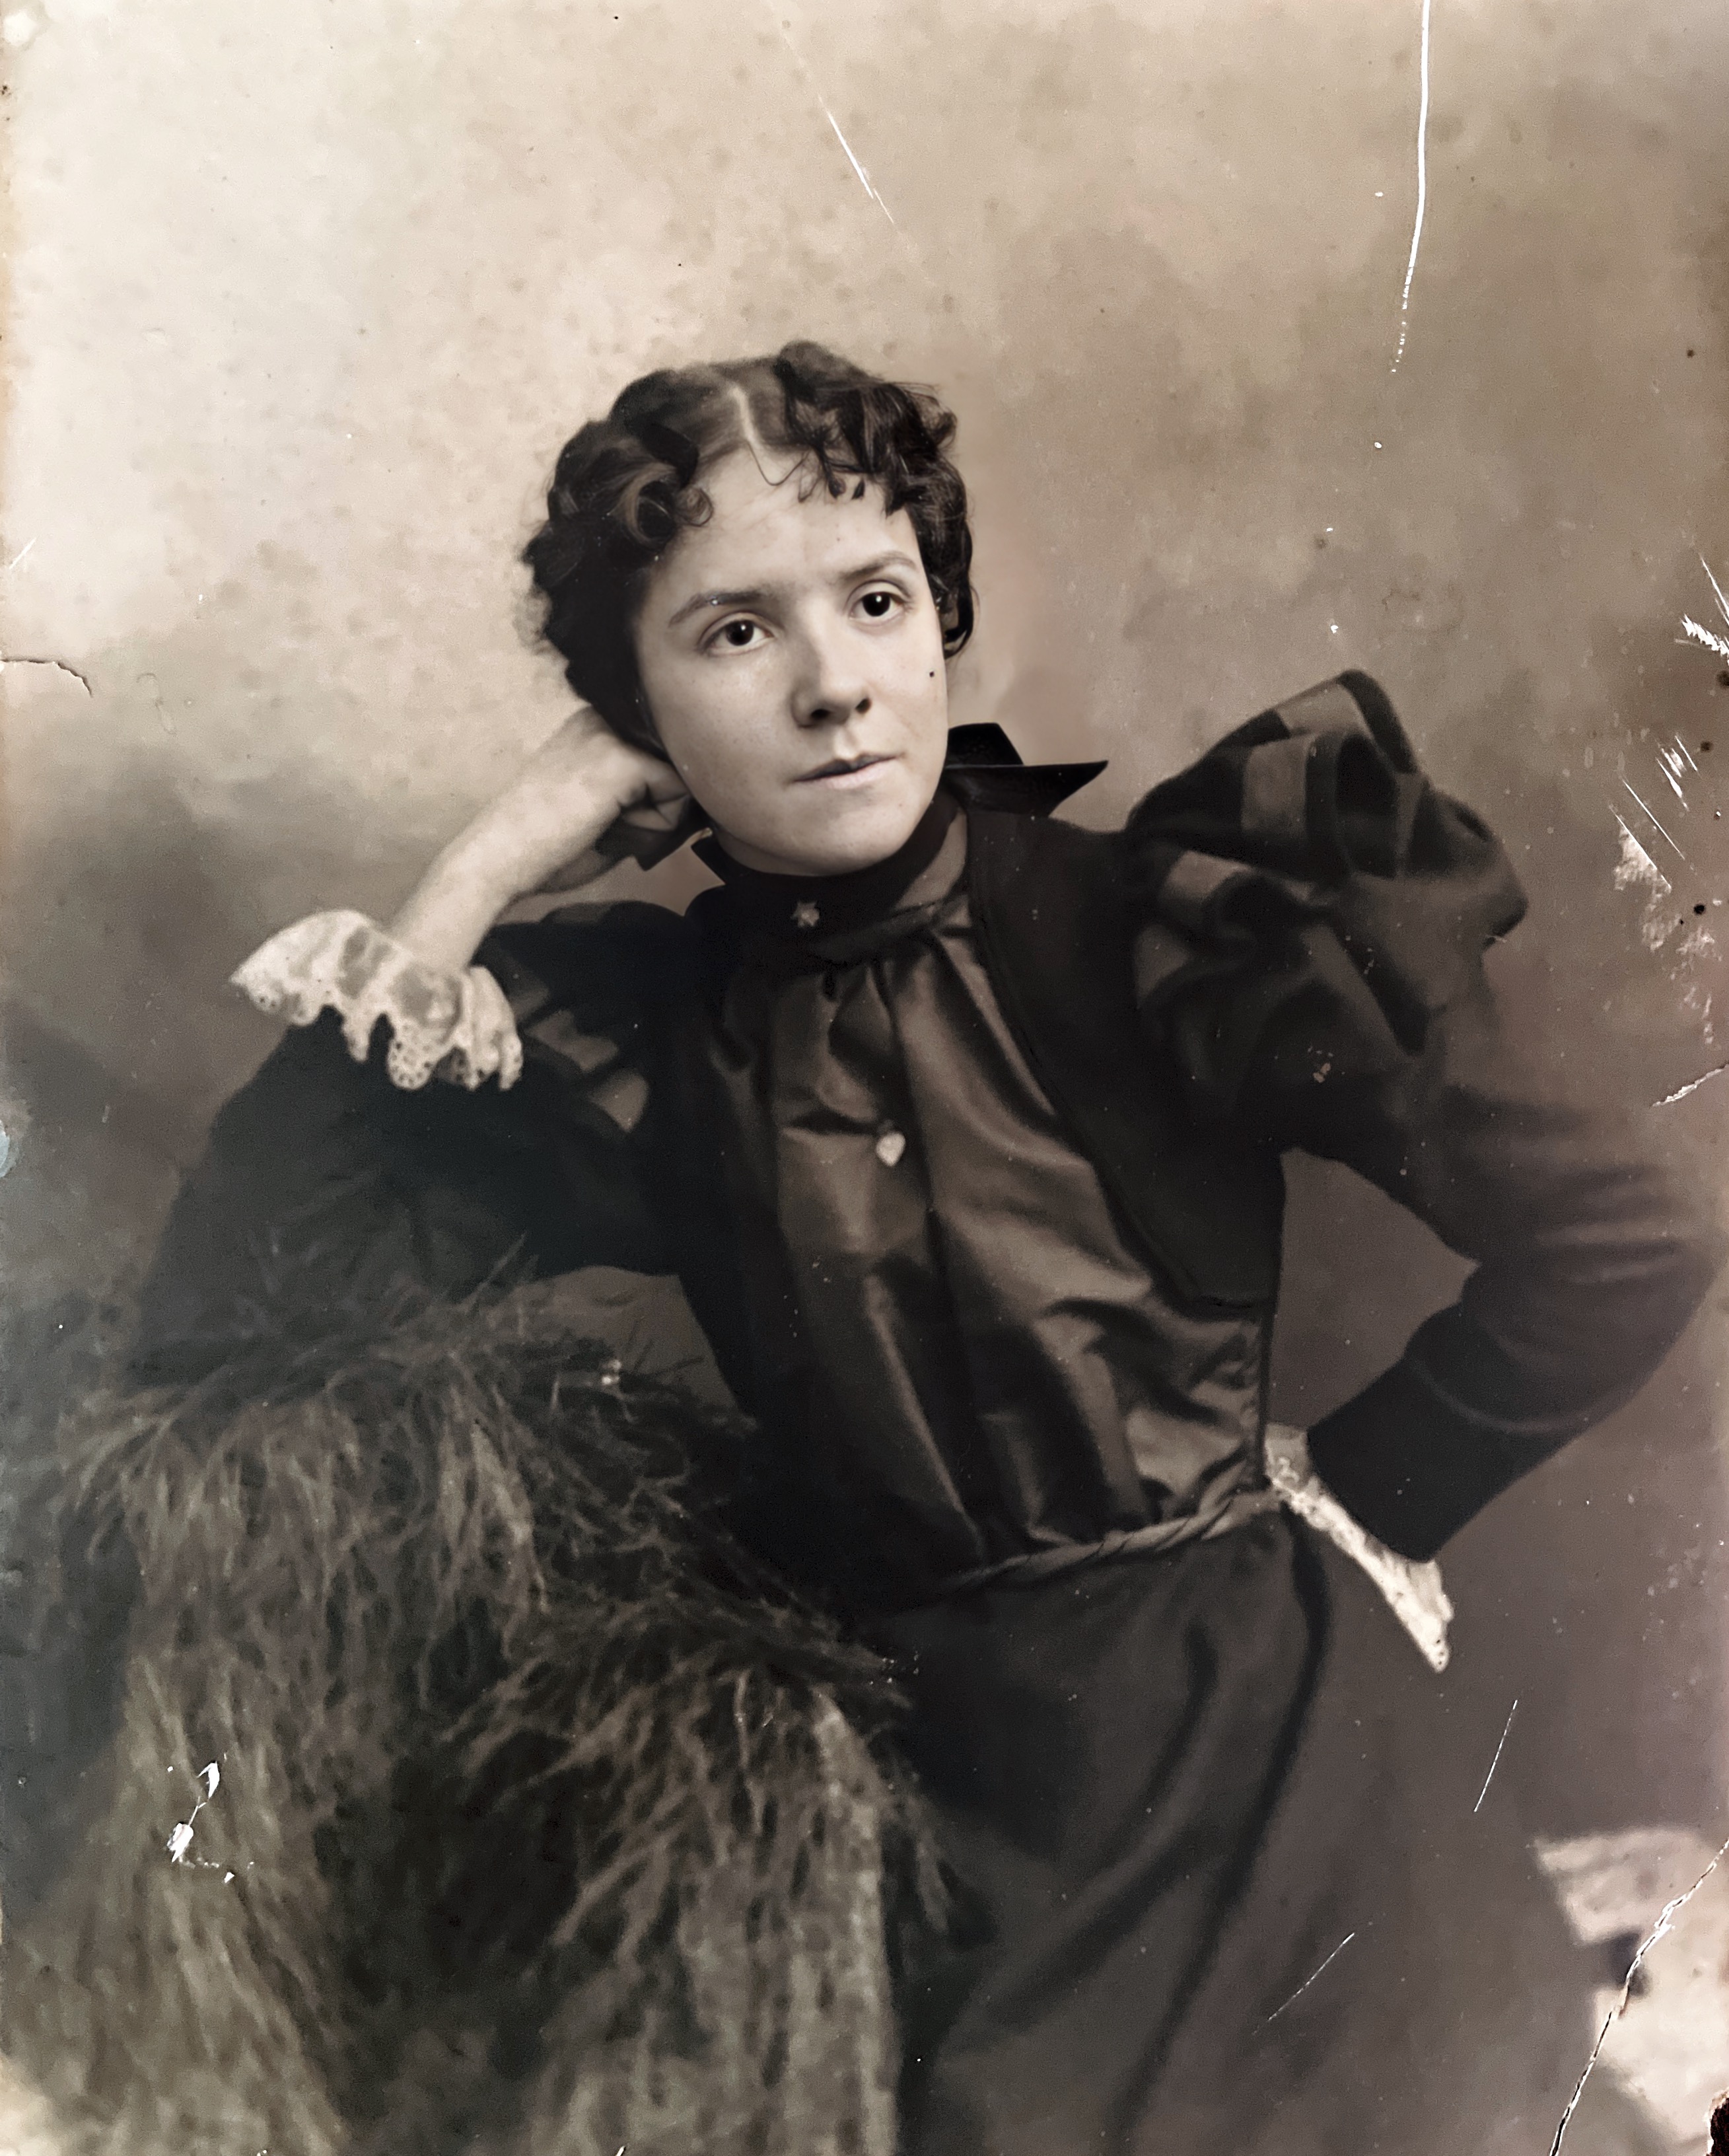 my Great-grandmother Margaret Mae Lucas Rommel around 1905